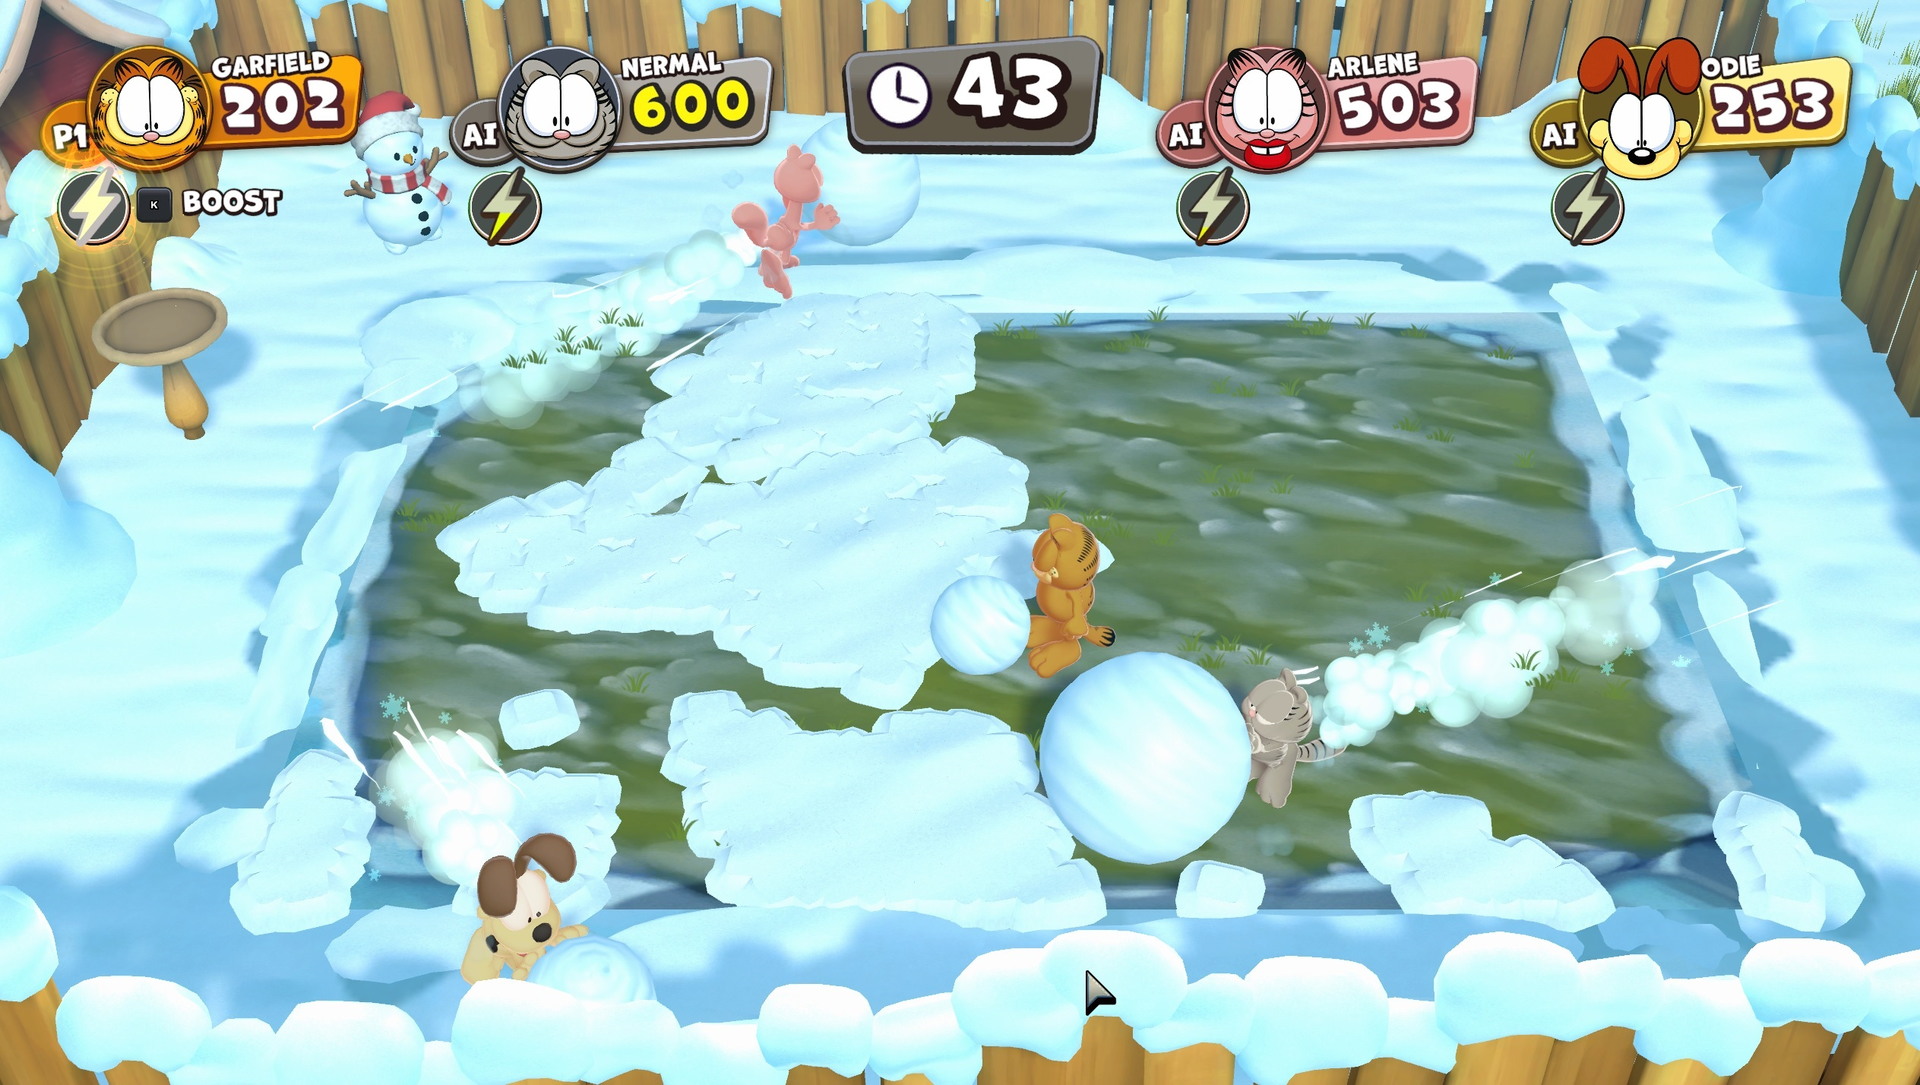 Garfield Lasagna Party - screenshot 2